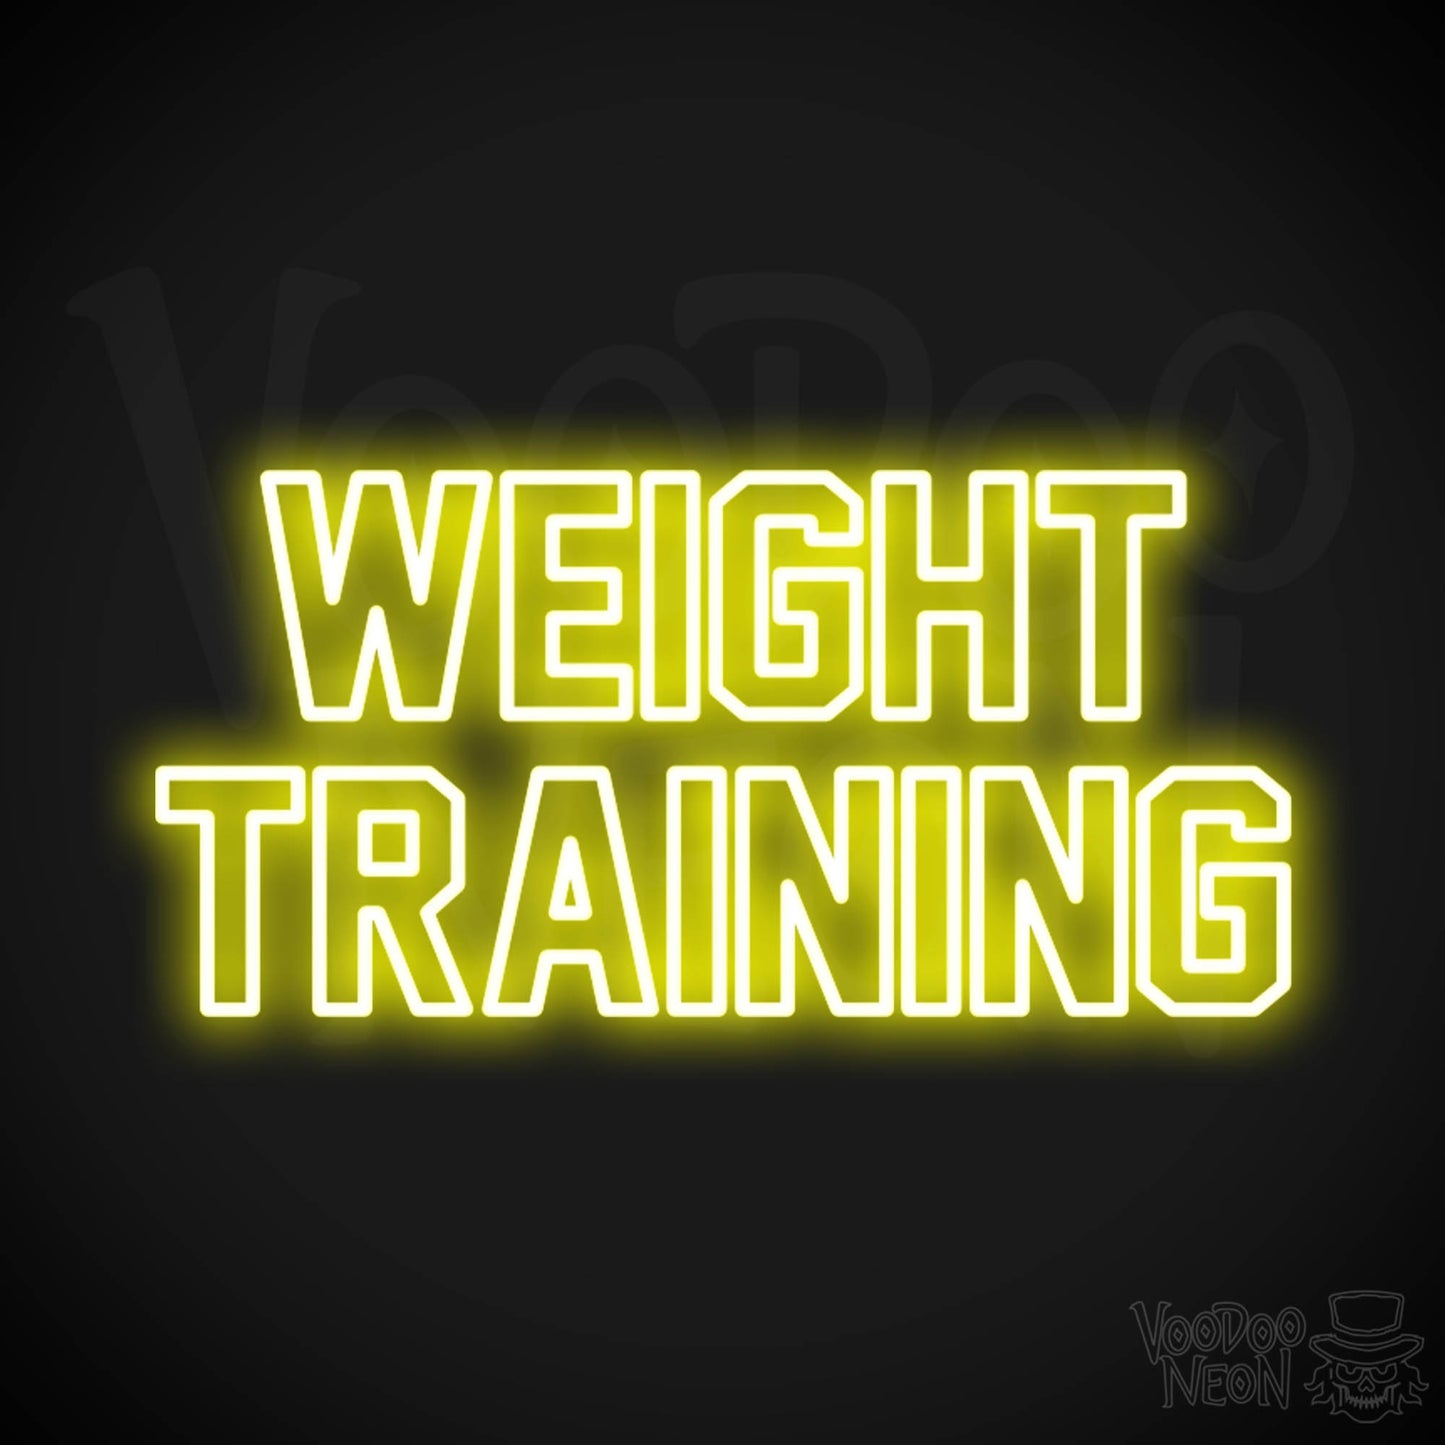 Weight Training LED Neon - Yellow